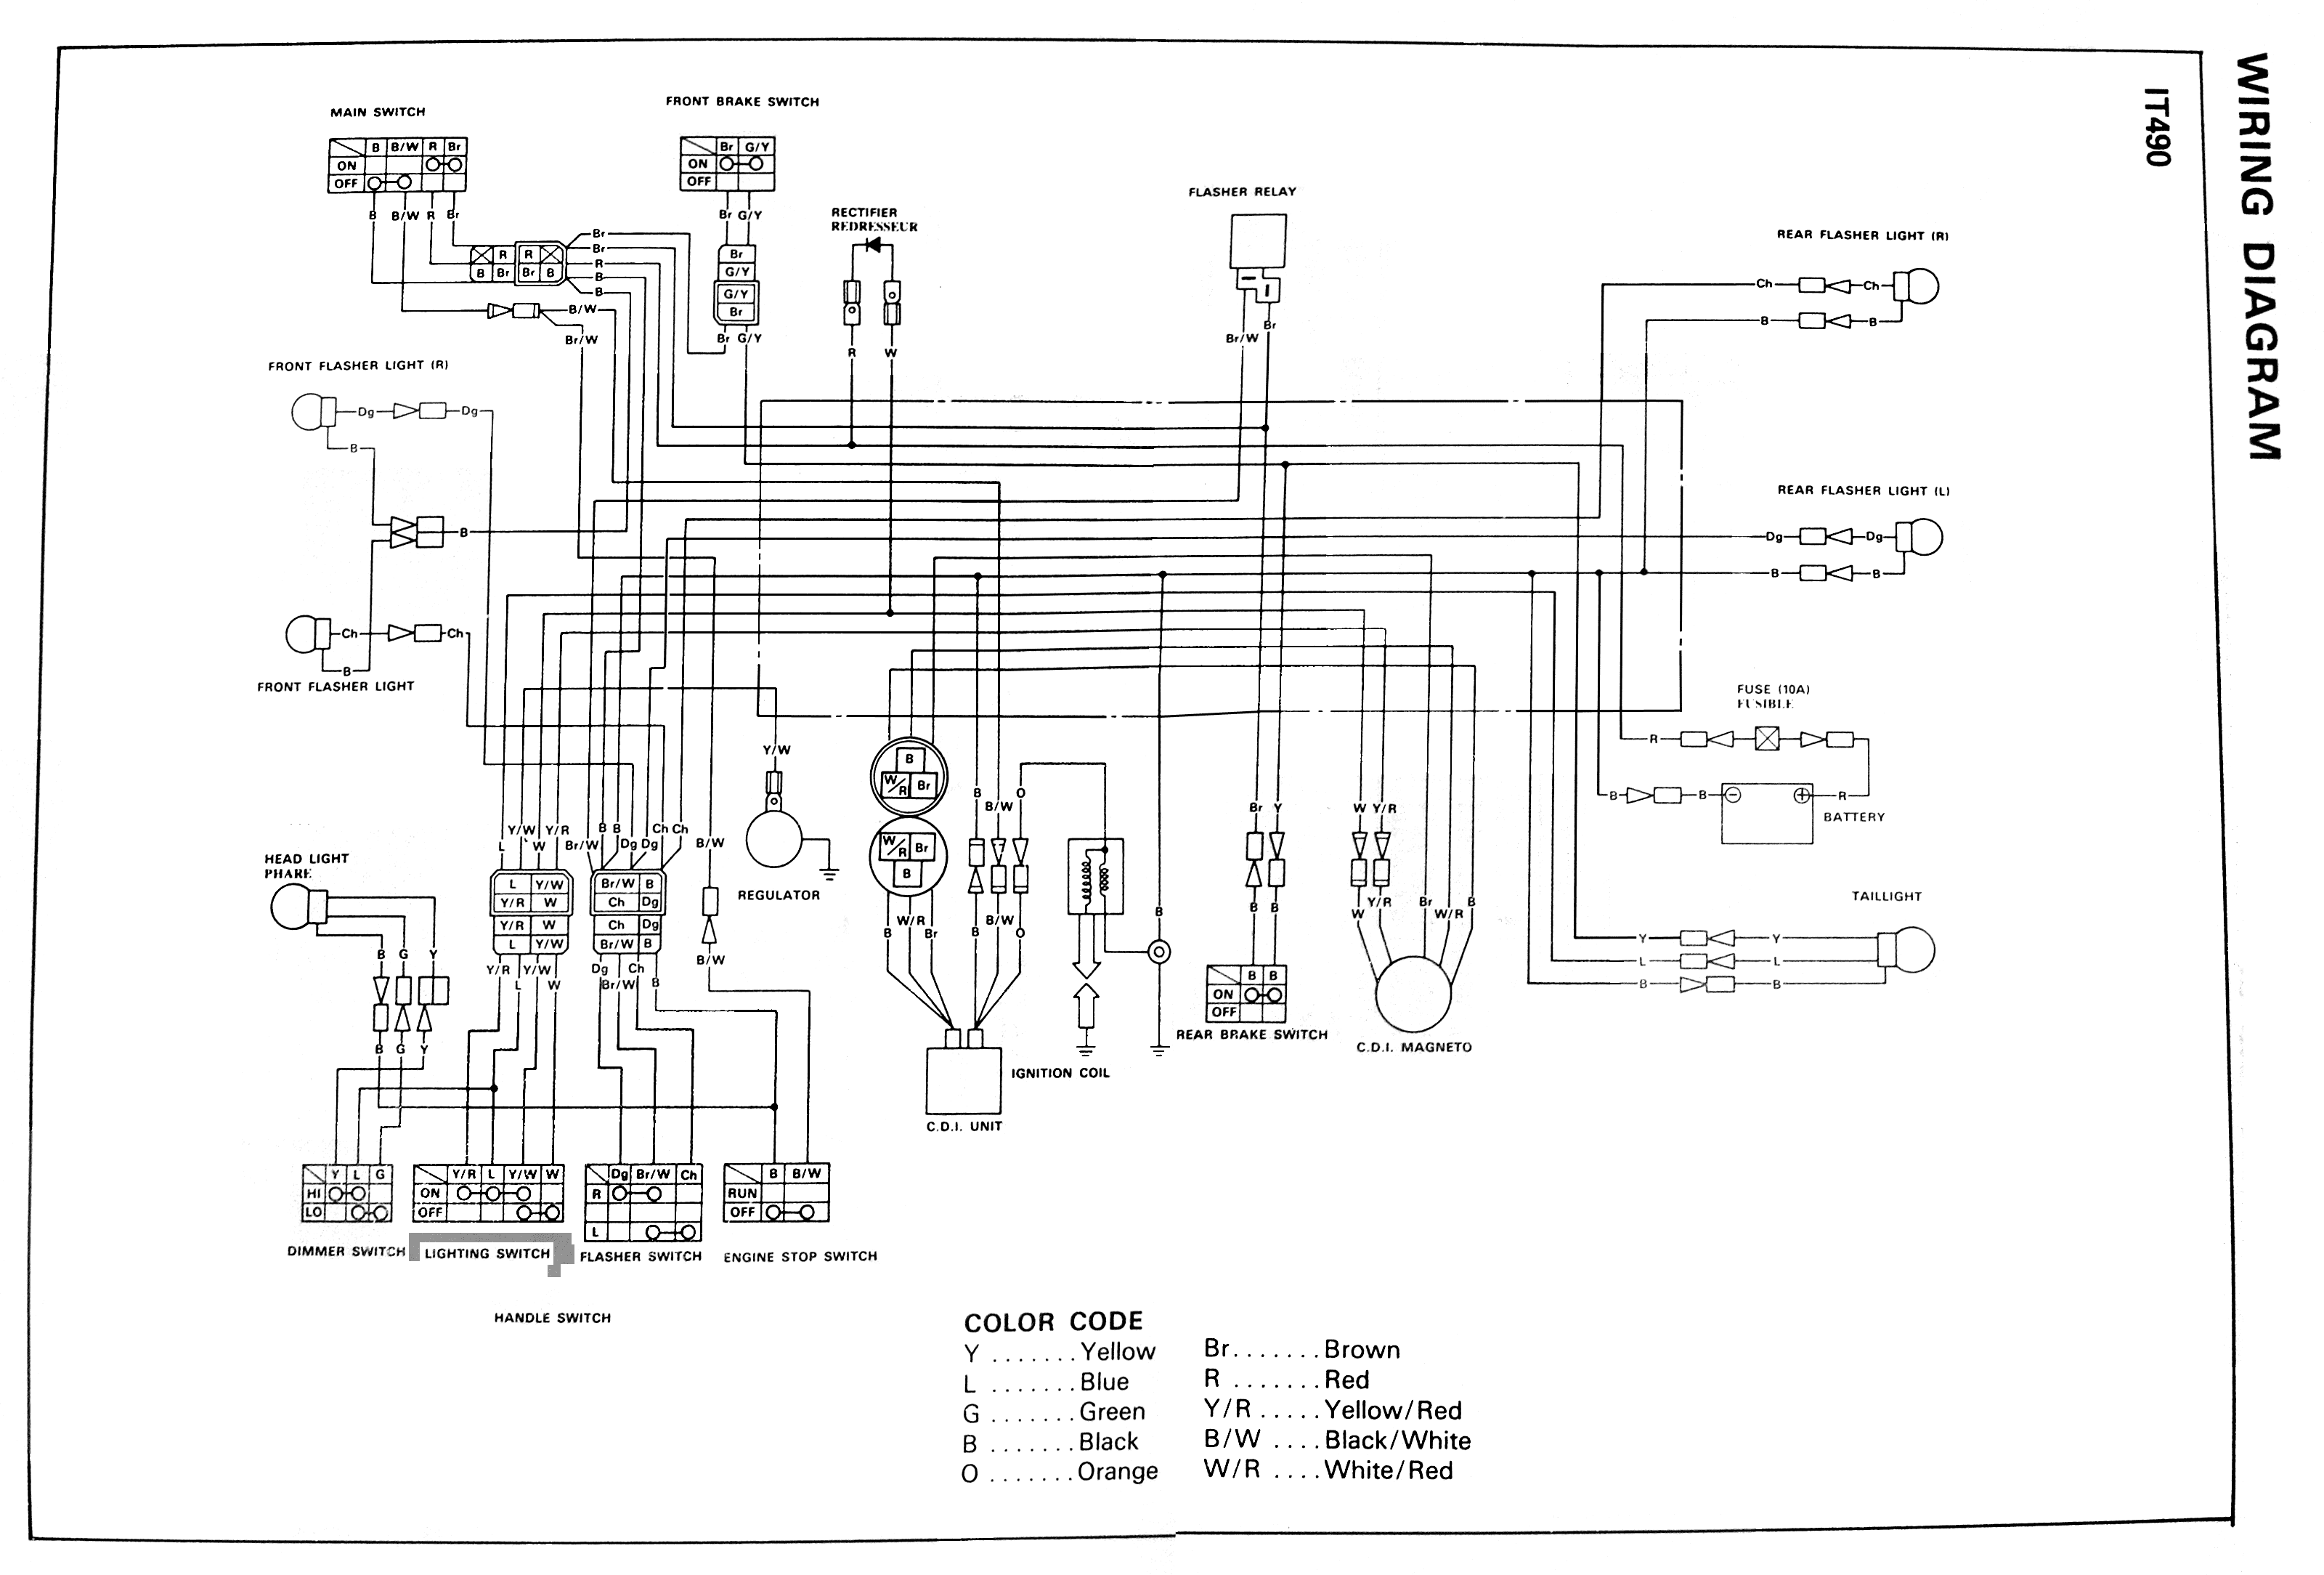 Wiring Diagram Yamaha Mx 80 Toyota 9 Autoservice Manfred Klein De